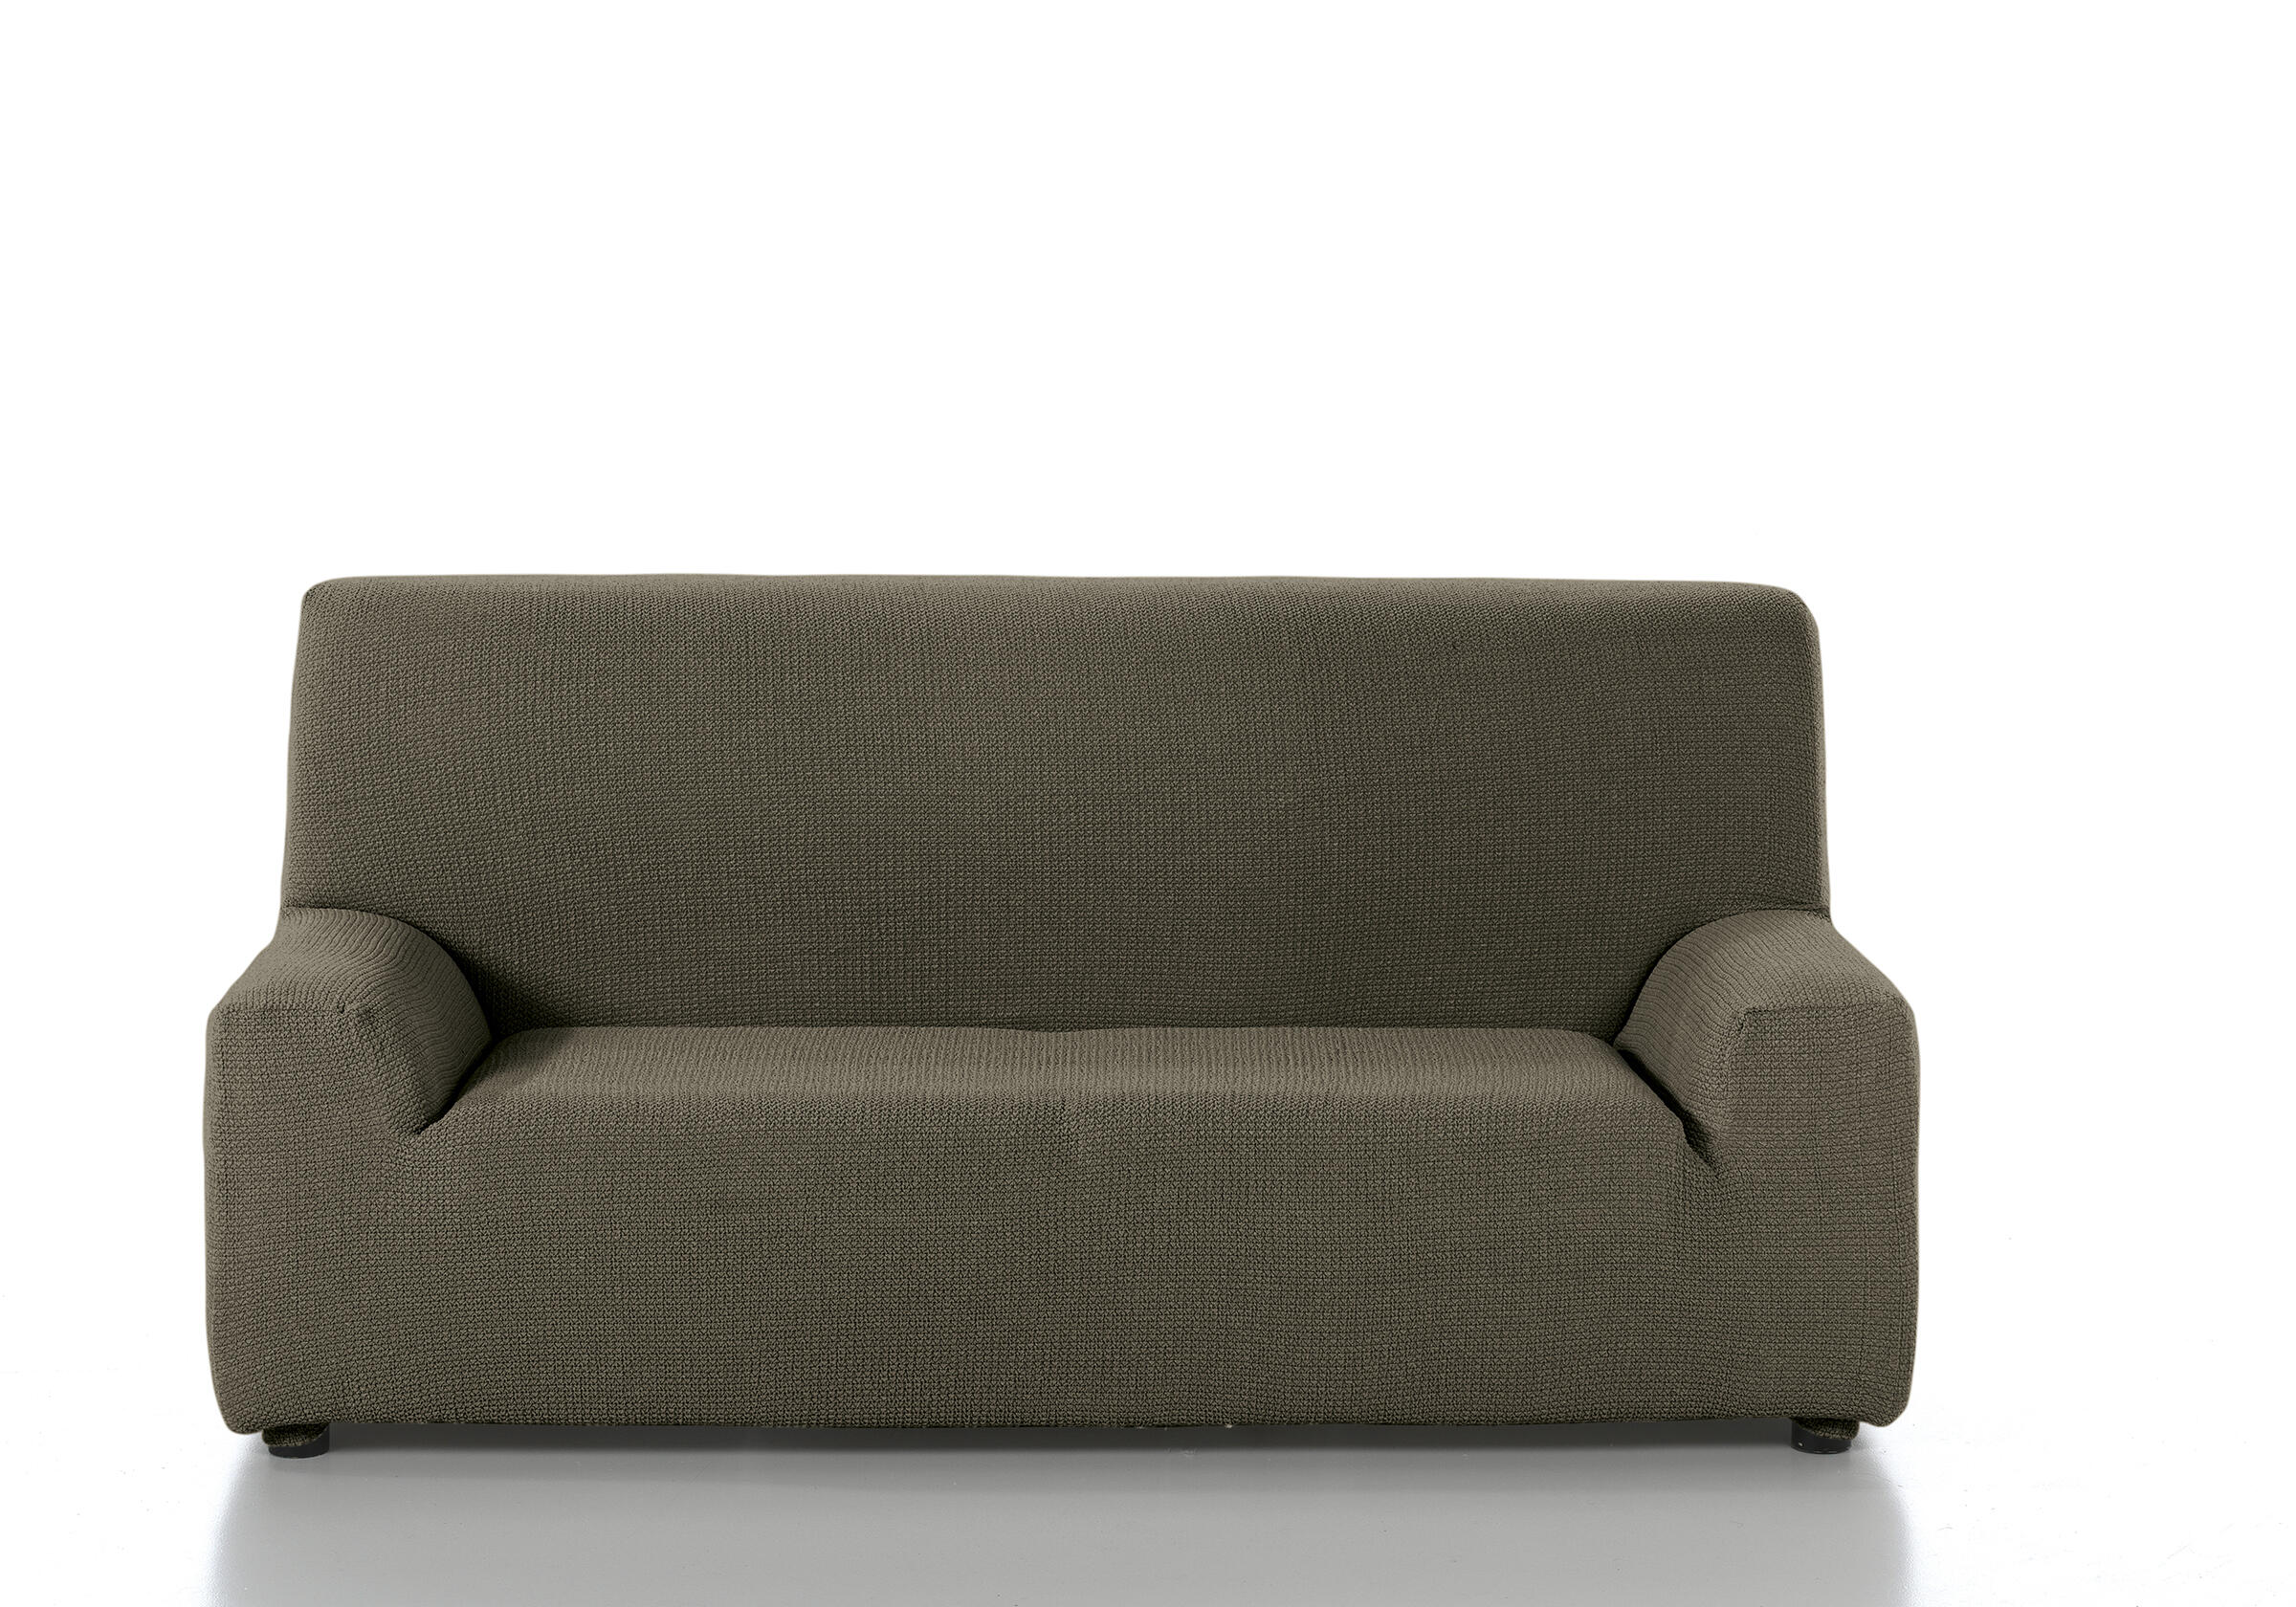 Funda sofá elástica Edir gris 4 plazas